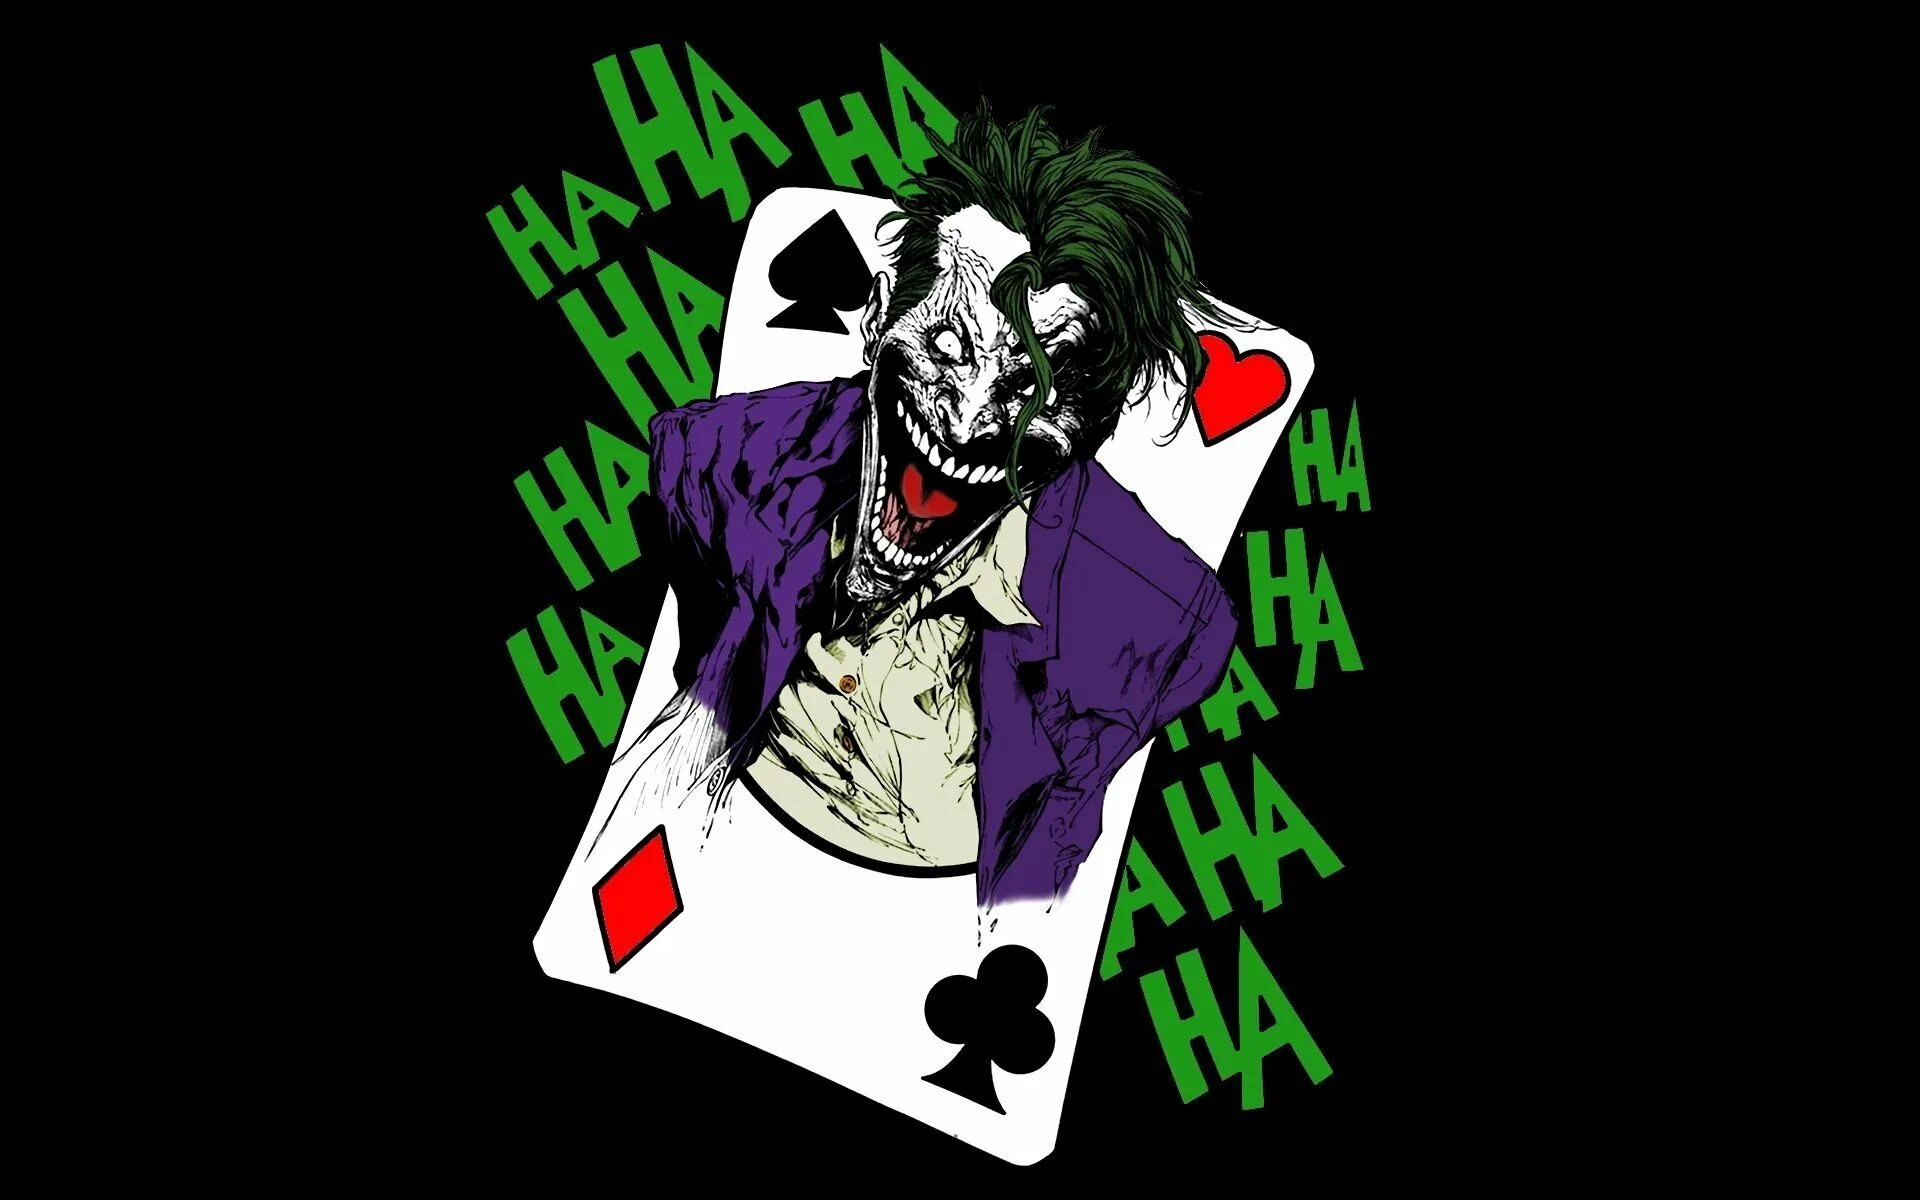 Joker joker demo. Джокер. Джокер карта. Джокер обои на телефон. Обои на рабочий стол Джокер.